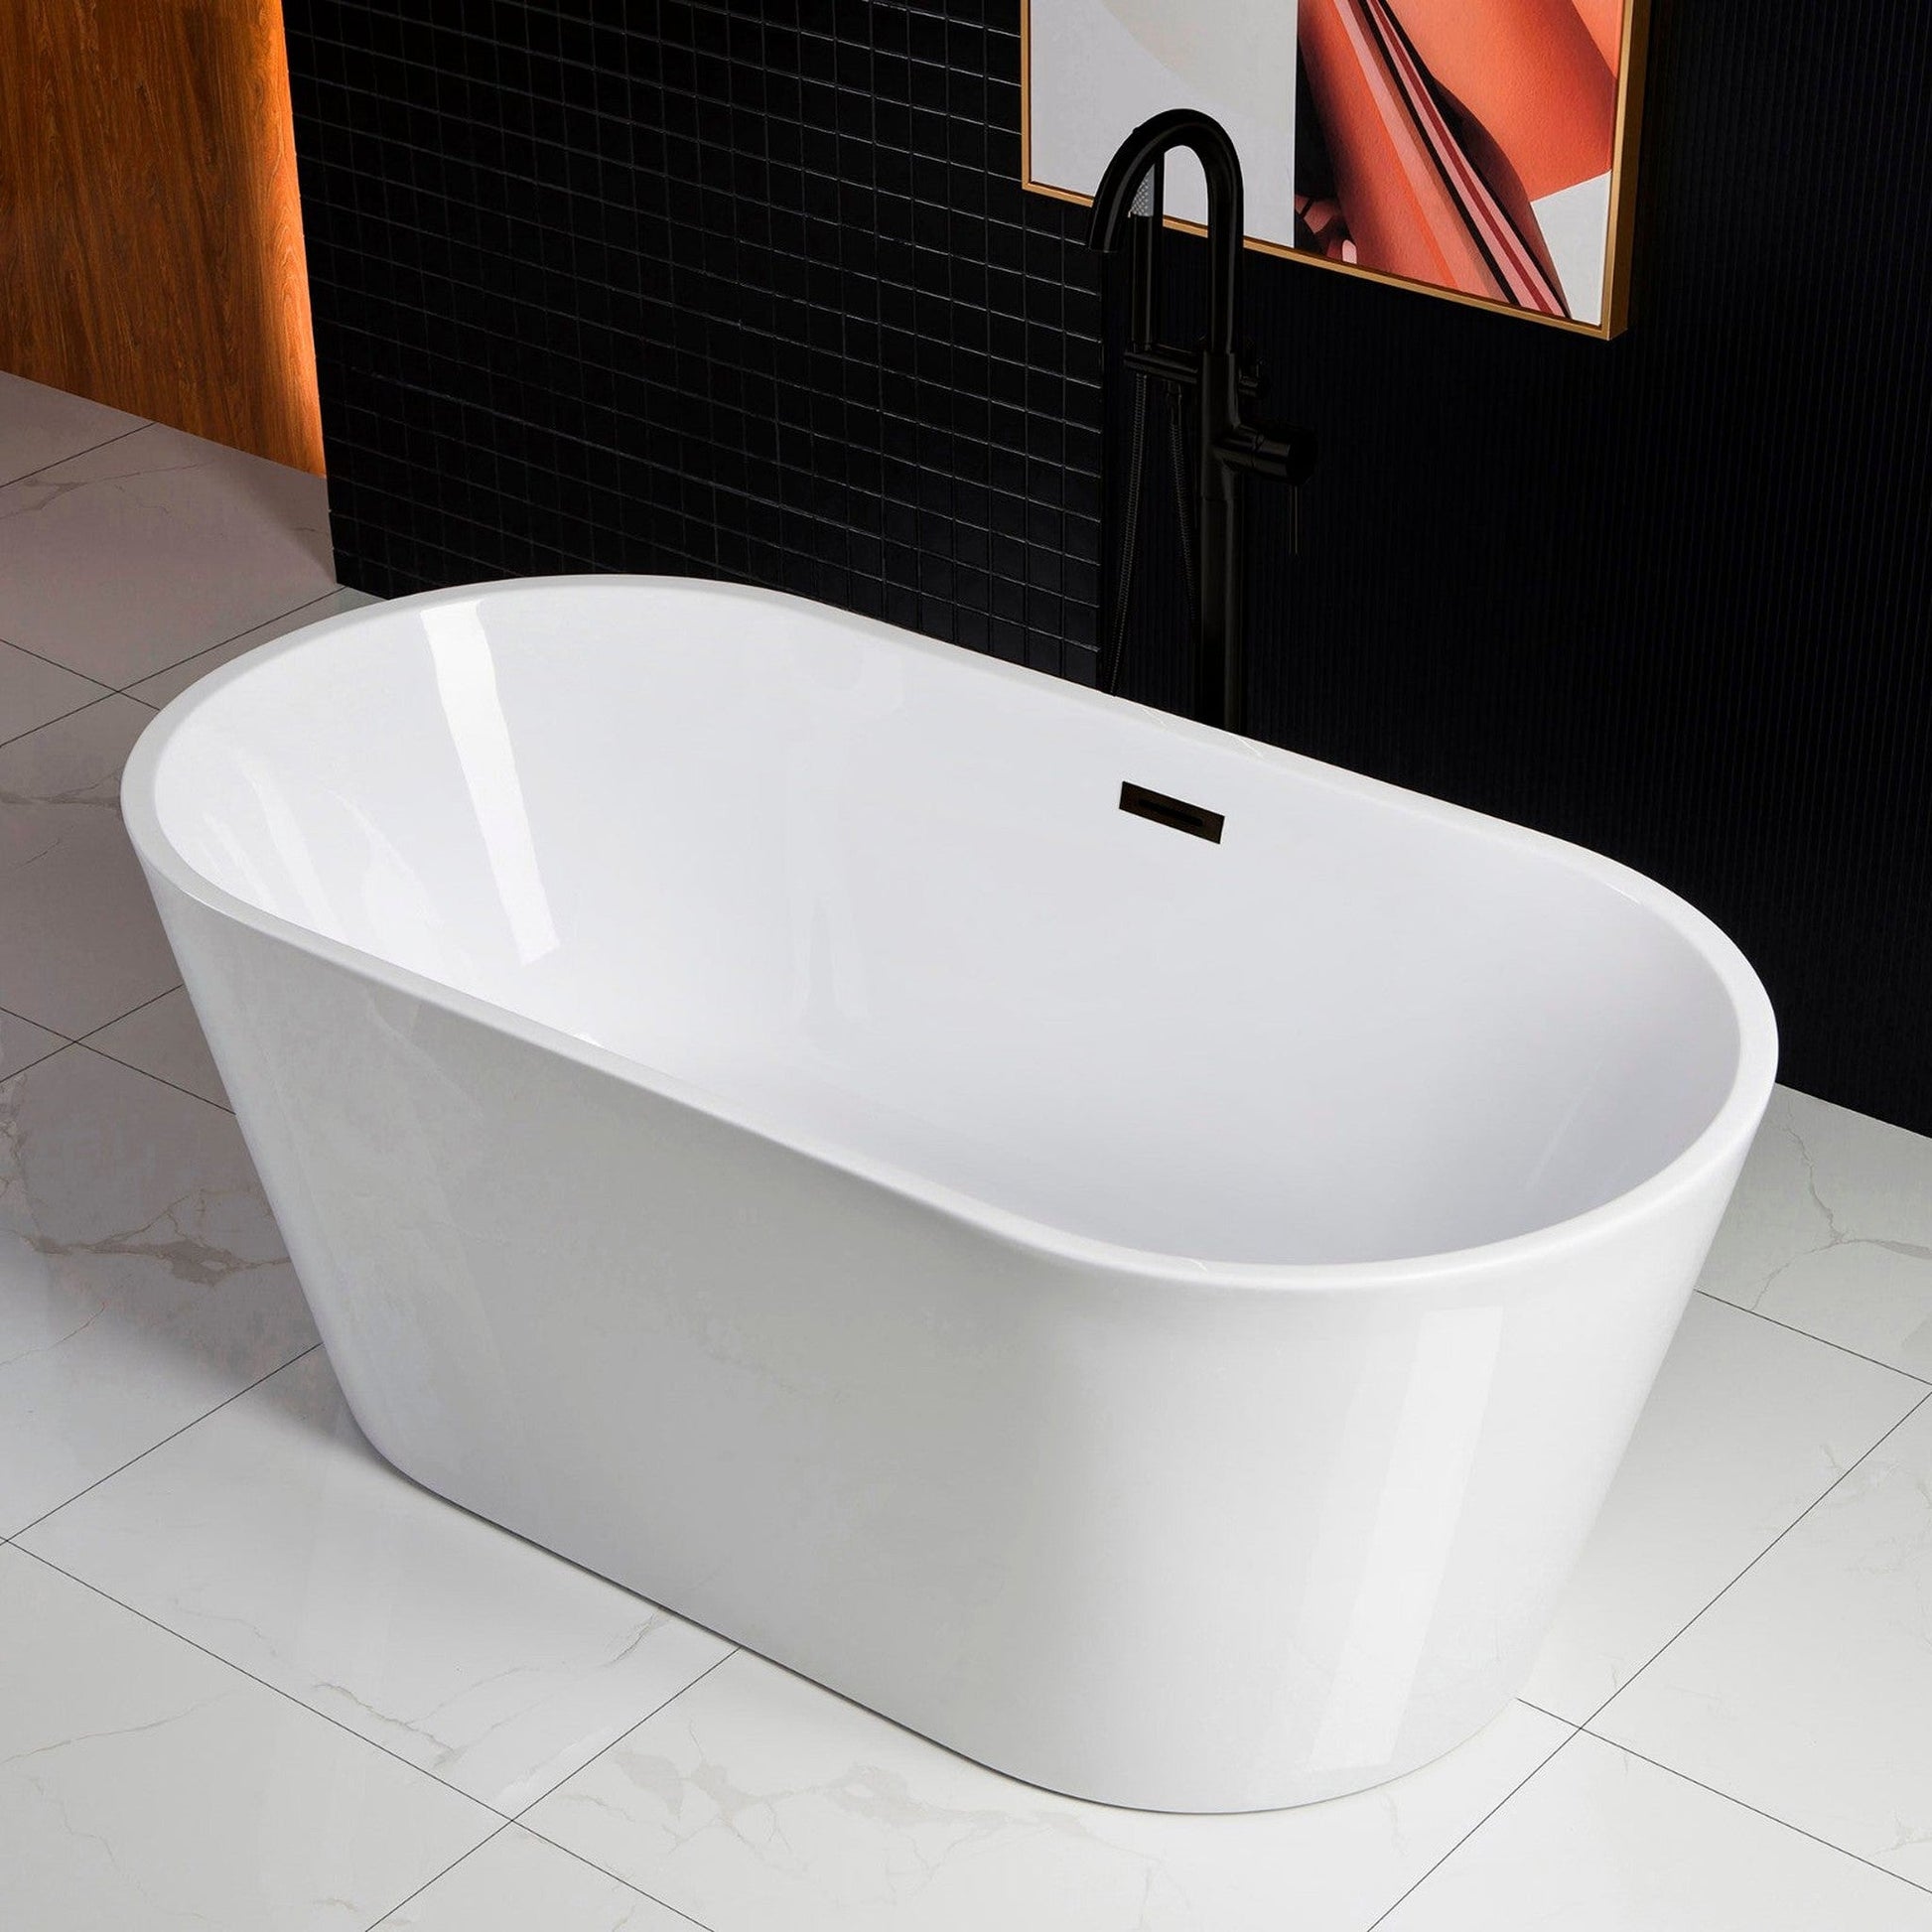 WoodBridge B0014 59" White Acrylic Freestanding Soaking Bathtub With Matte Black Drain, Overflow, F0006MBRD Tub Filler and Caddy Tray